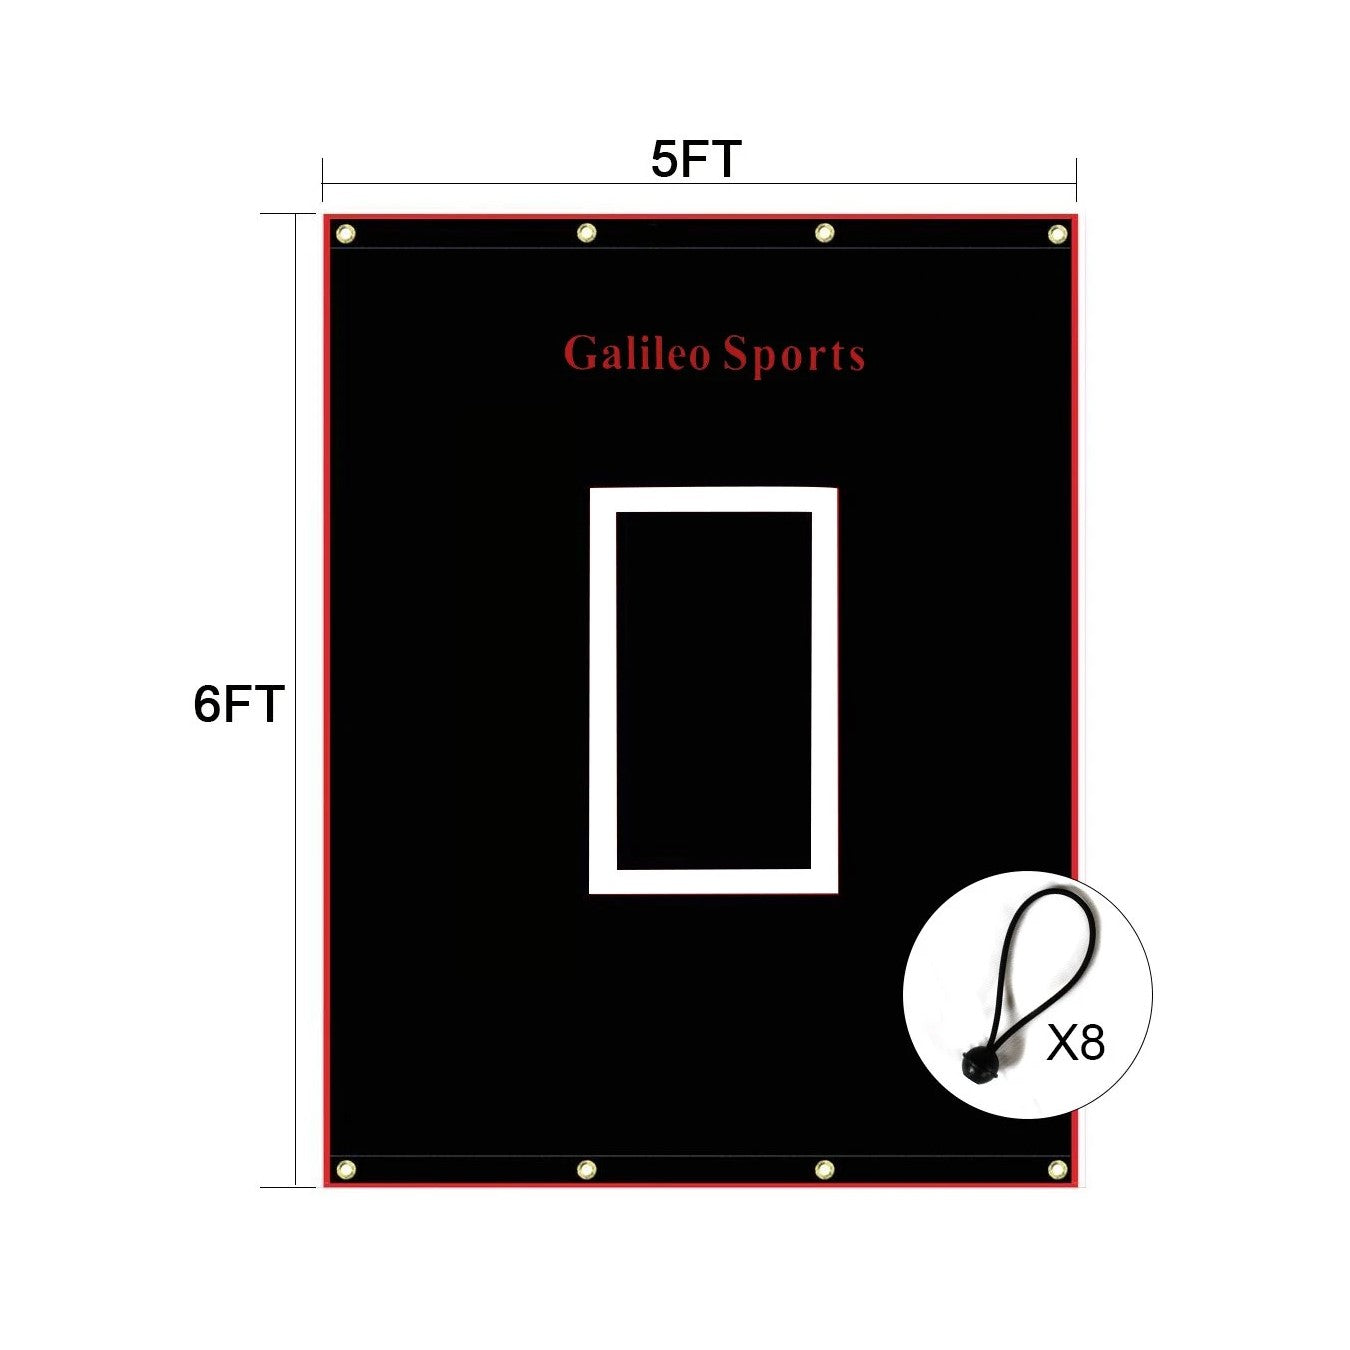 Butée de sécurité Galileo Softball 5X6 / Cible de lancement de butée Viny